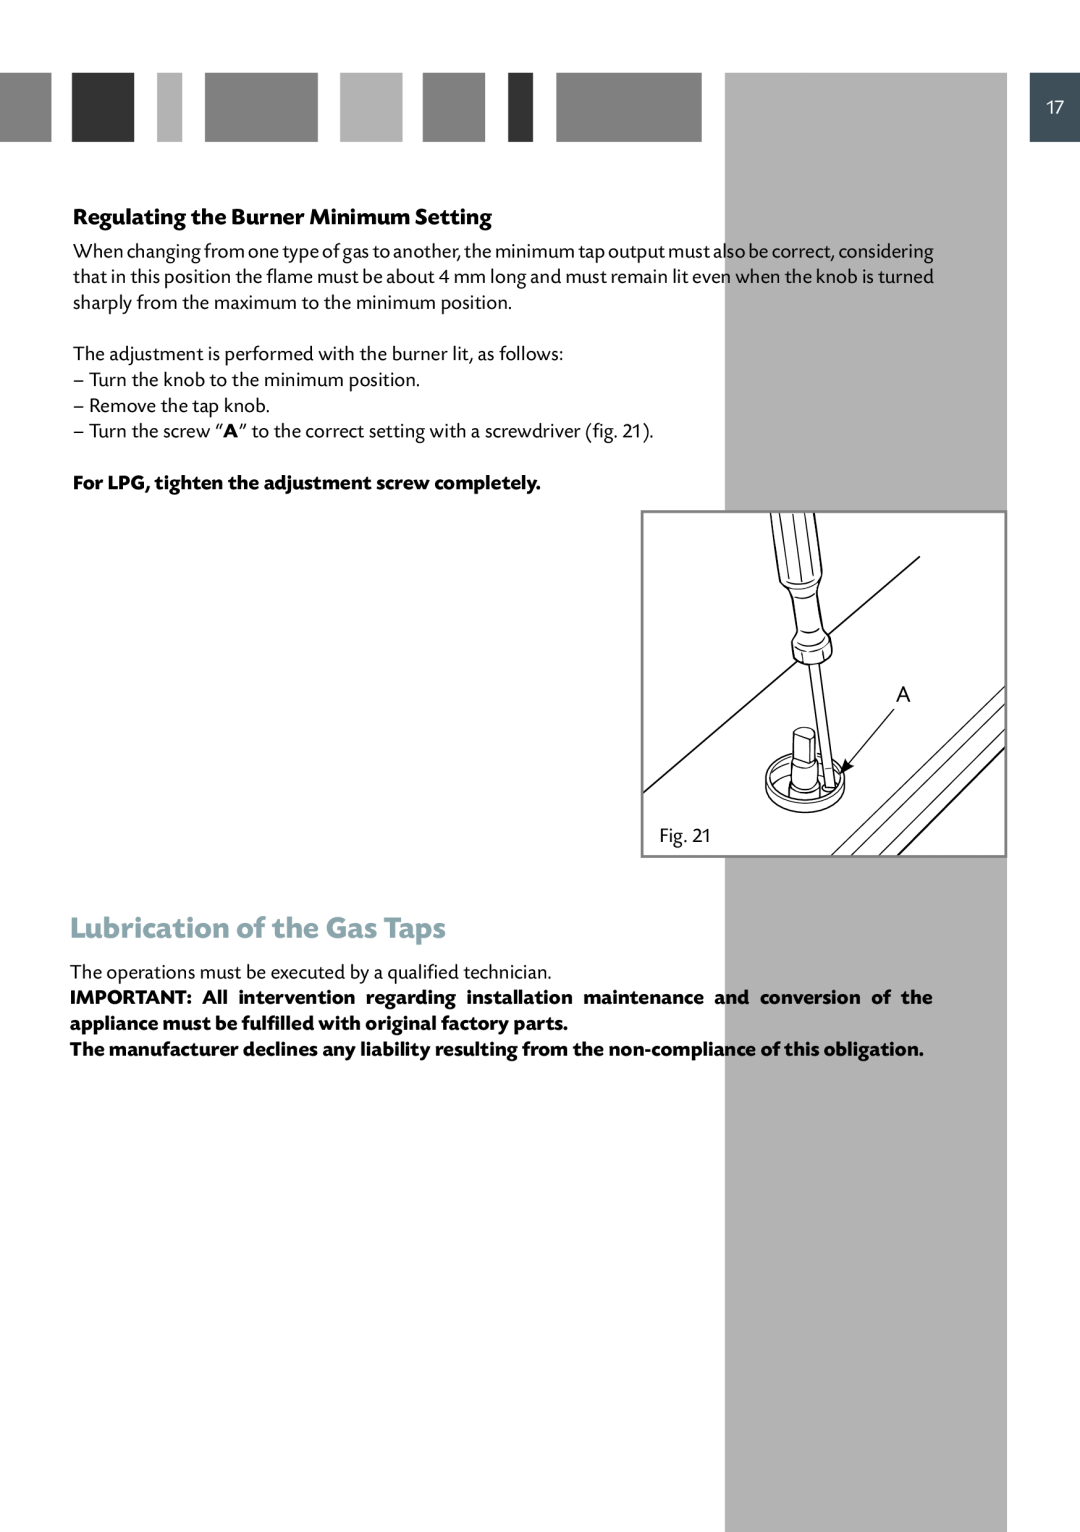 CDA HCG 931 manual Lubrication of the Gas Taps, Regulating the Burner Minimum Setting 